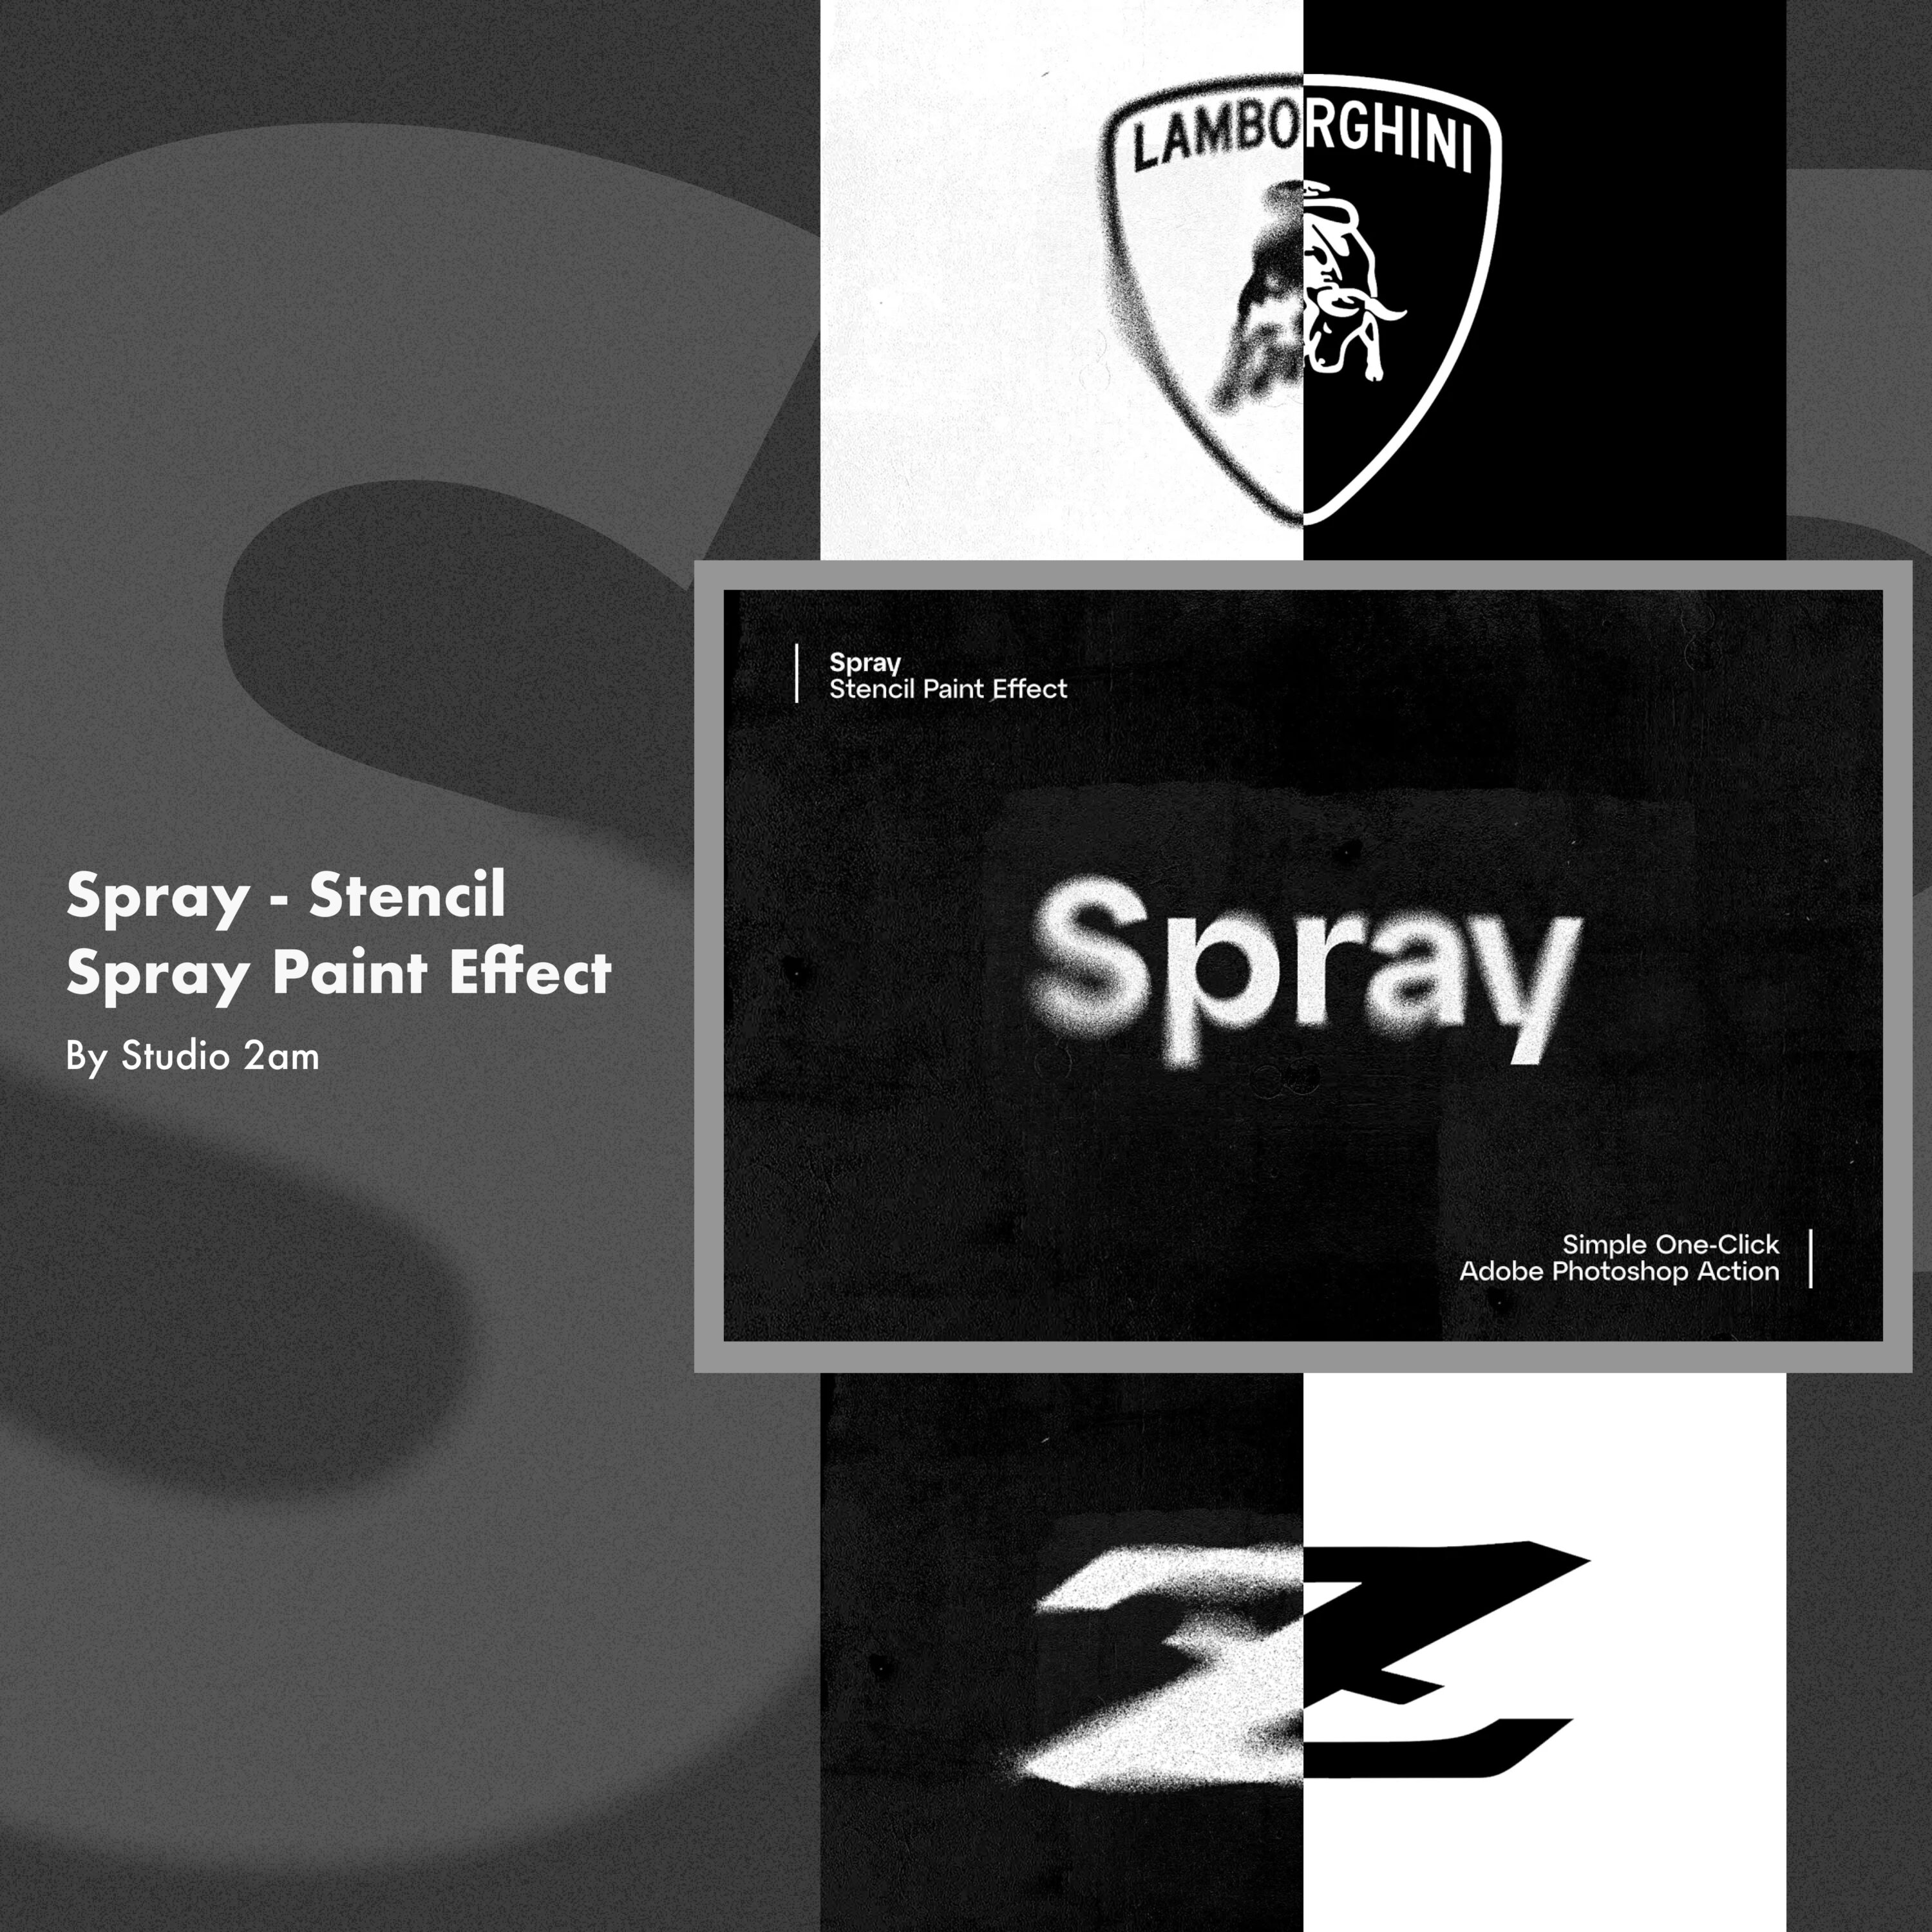 Spray - Stencil Spray Paint Effect cover image.